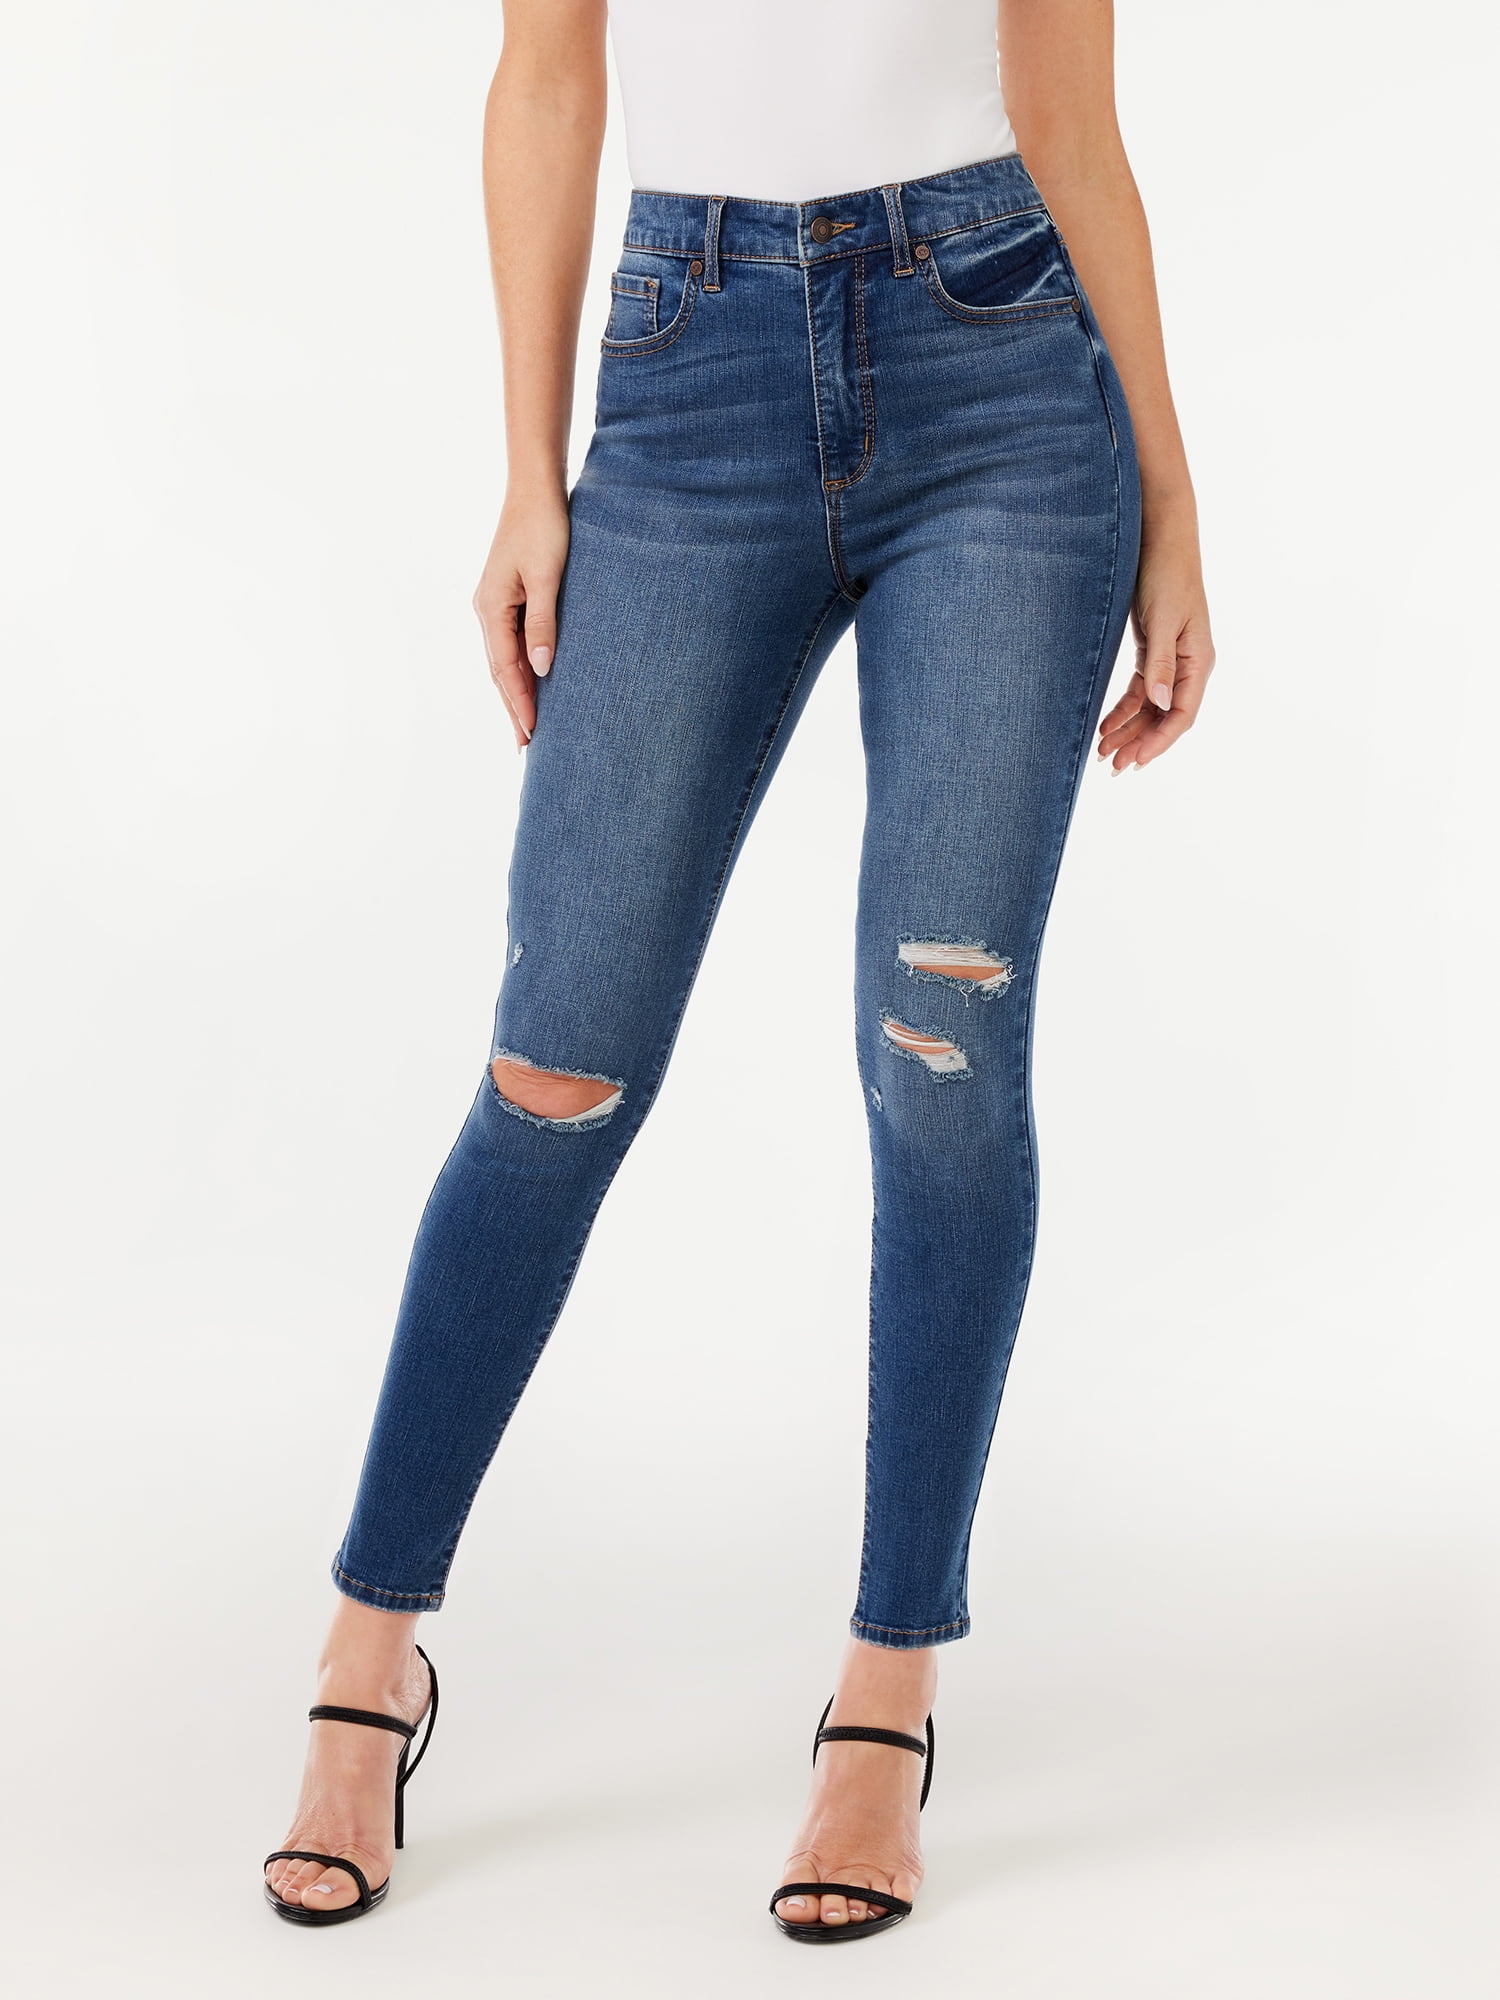 Sofia Jeans Women's Rosa Curvy Skinny Super High Rise Jeans - Walmart.com